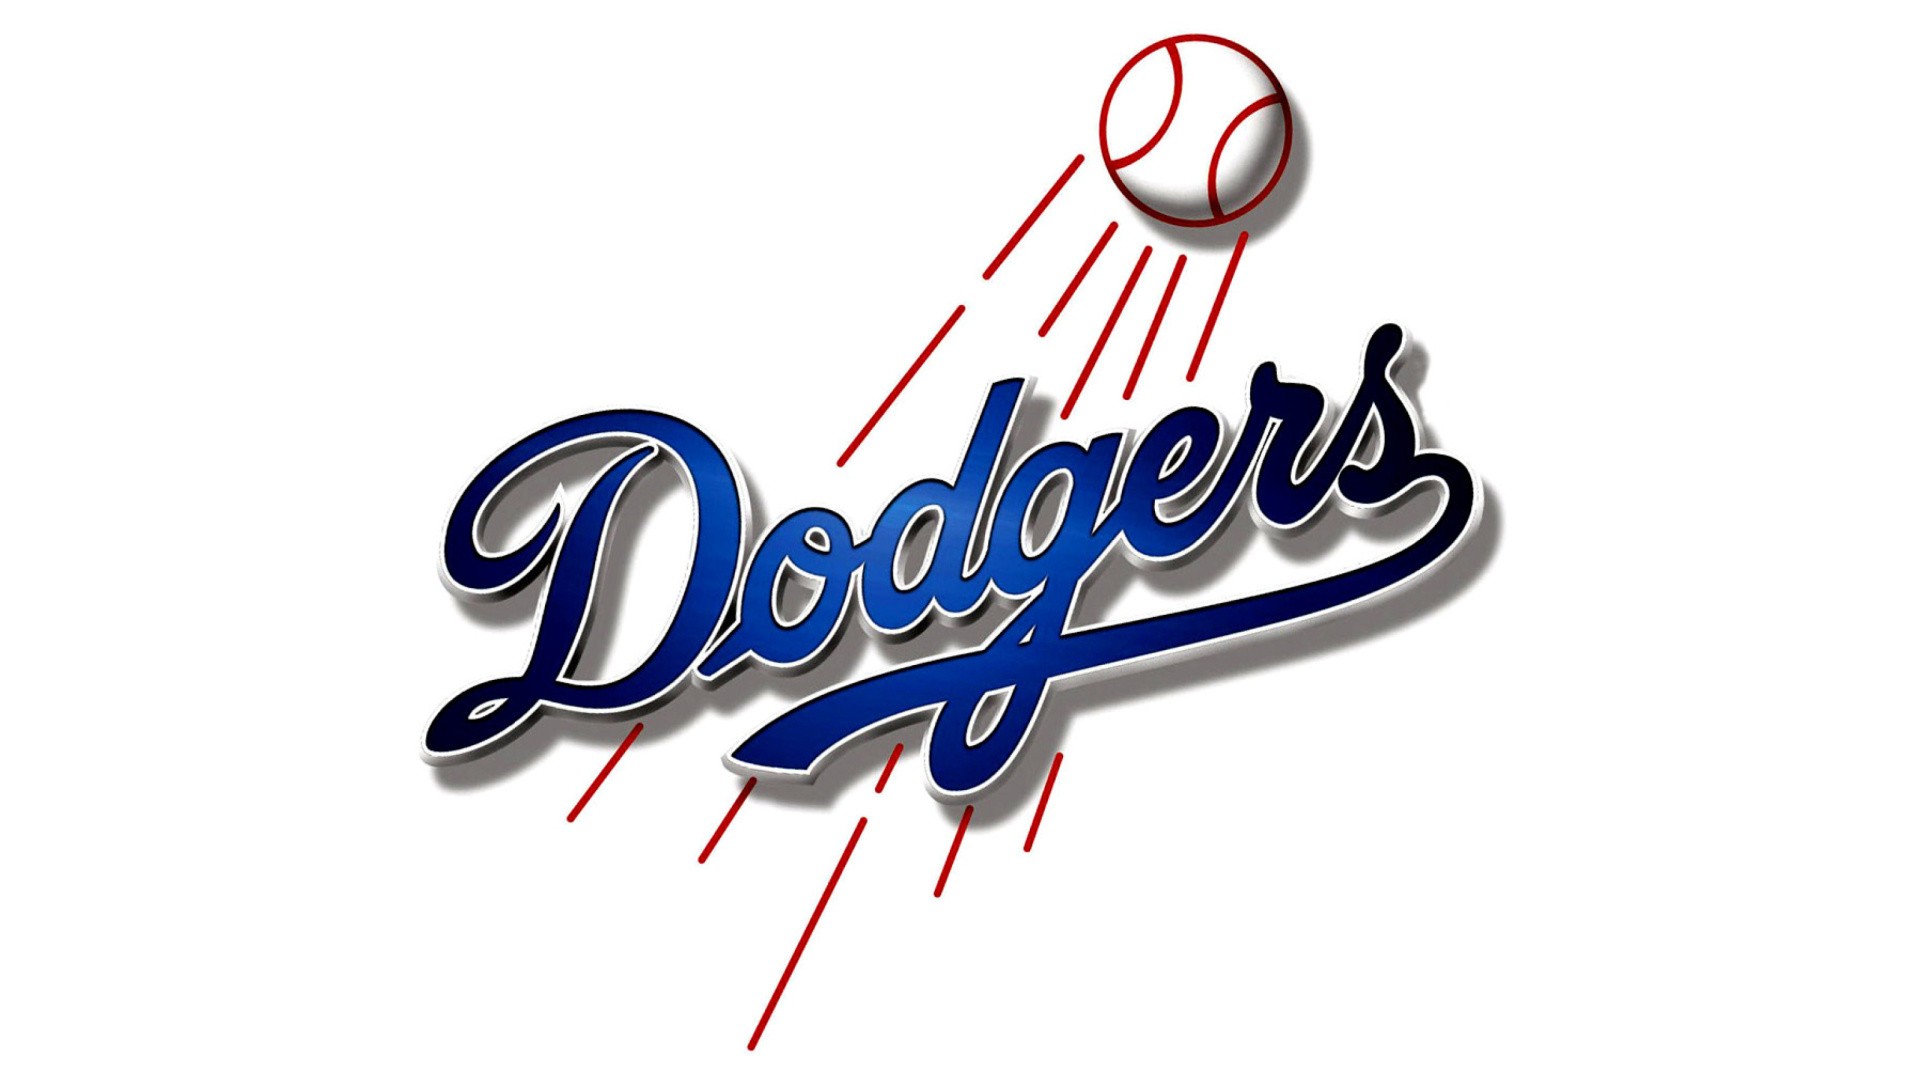 Los Angeles Dodgers News